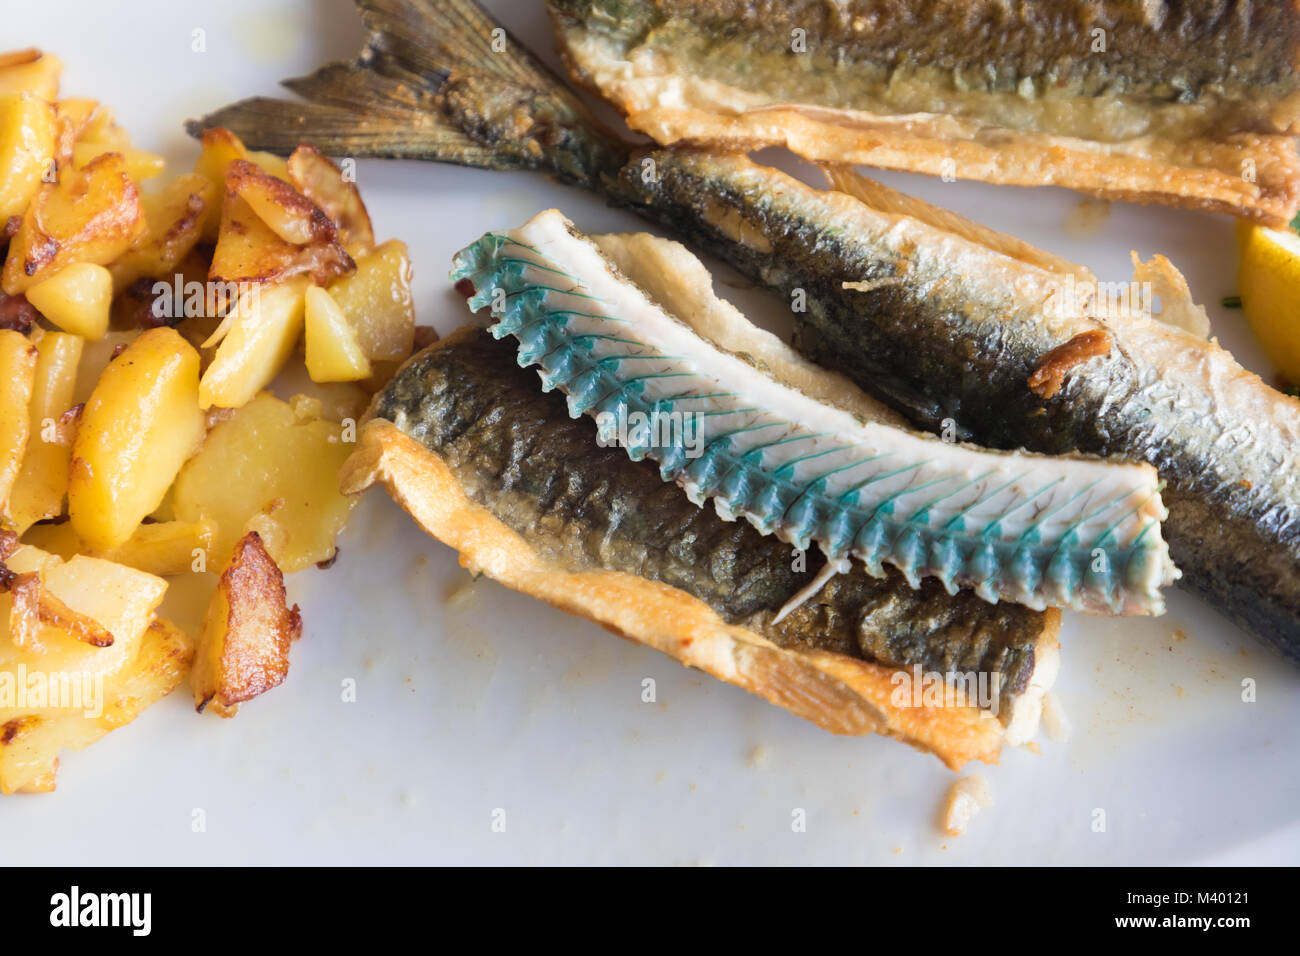 Needle fish (belone belone) on a plate, Wieck, Germany Stock Photo